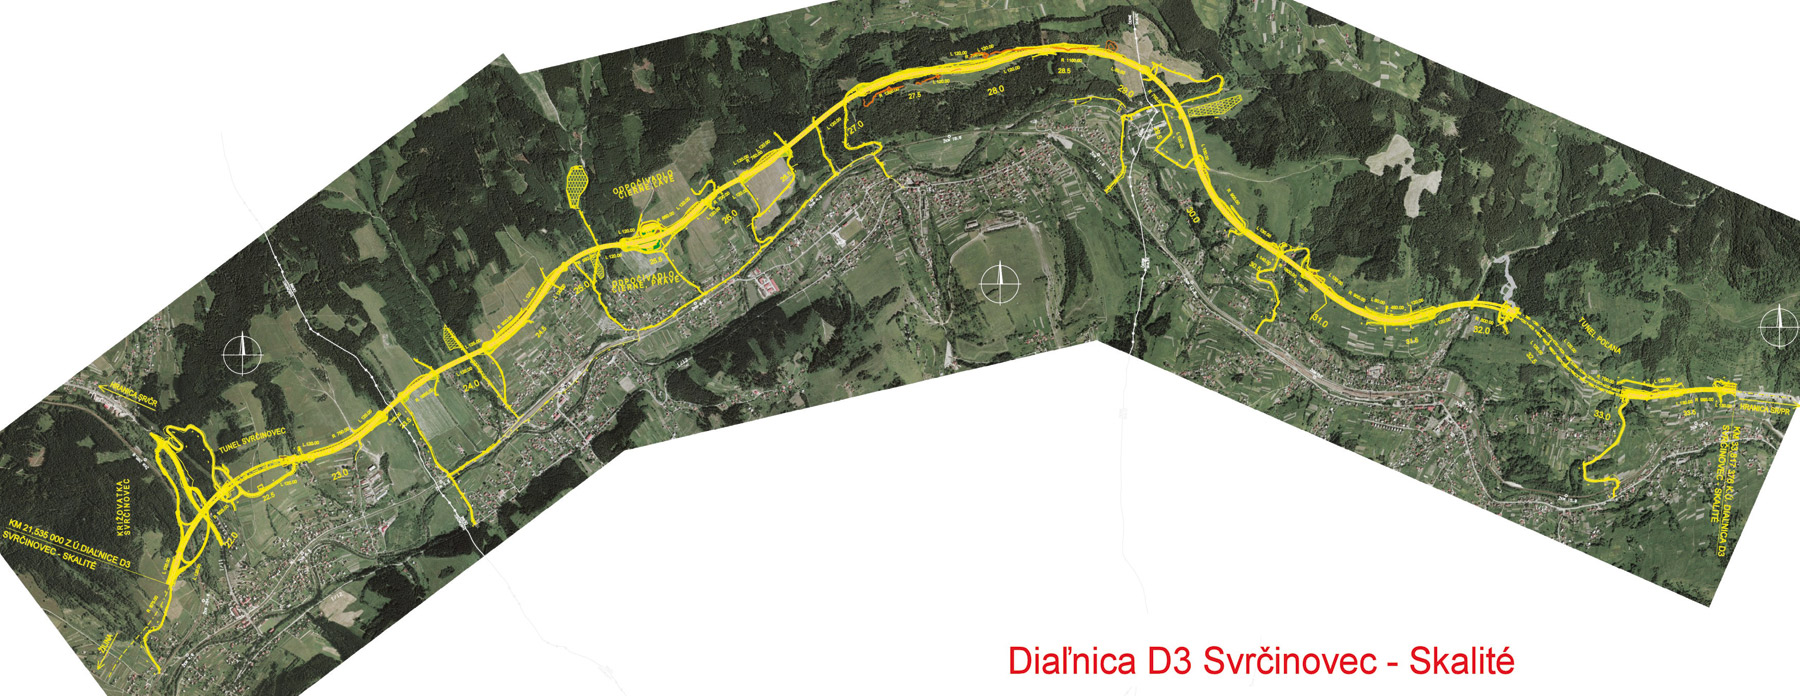 Obr. 1 Ortofotomapa trasy diaľnice D3 Svrčinovec – Skalité